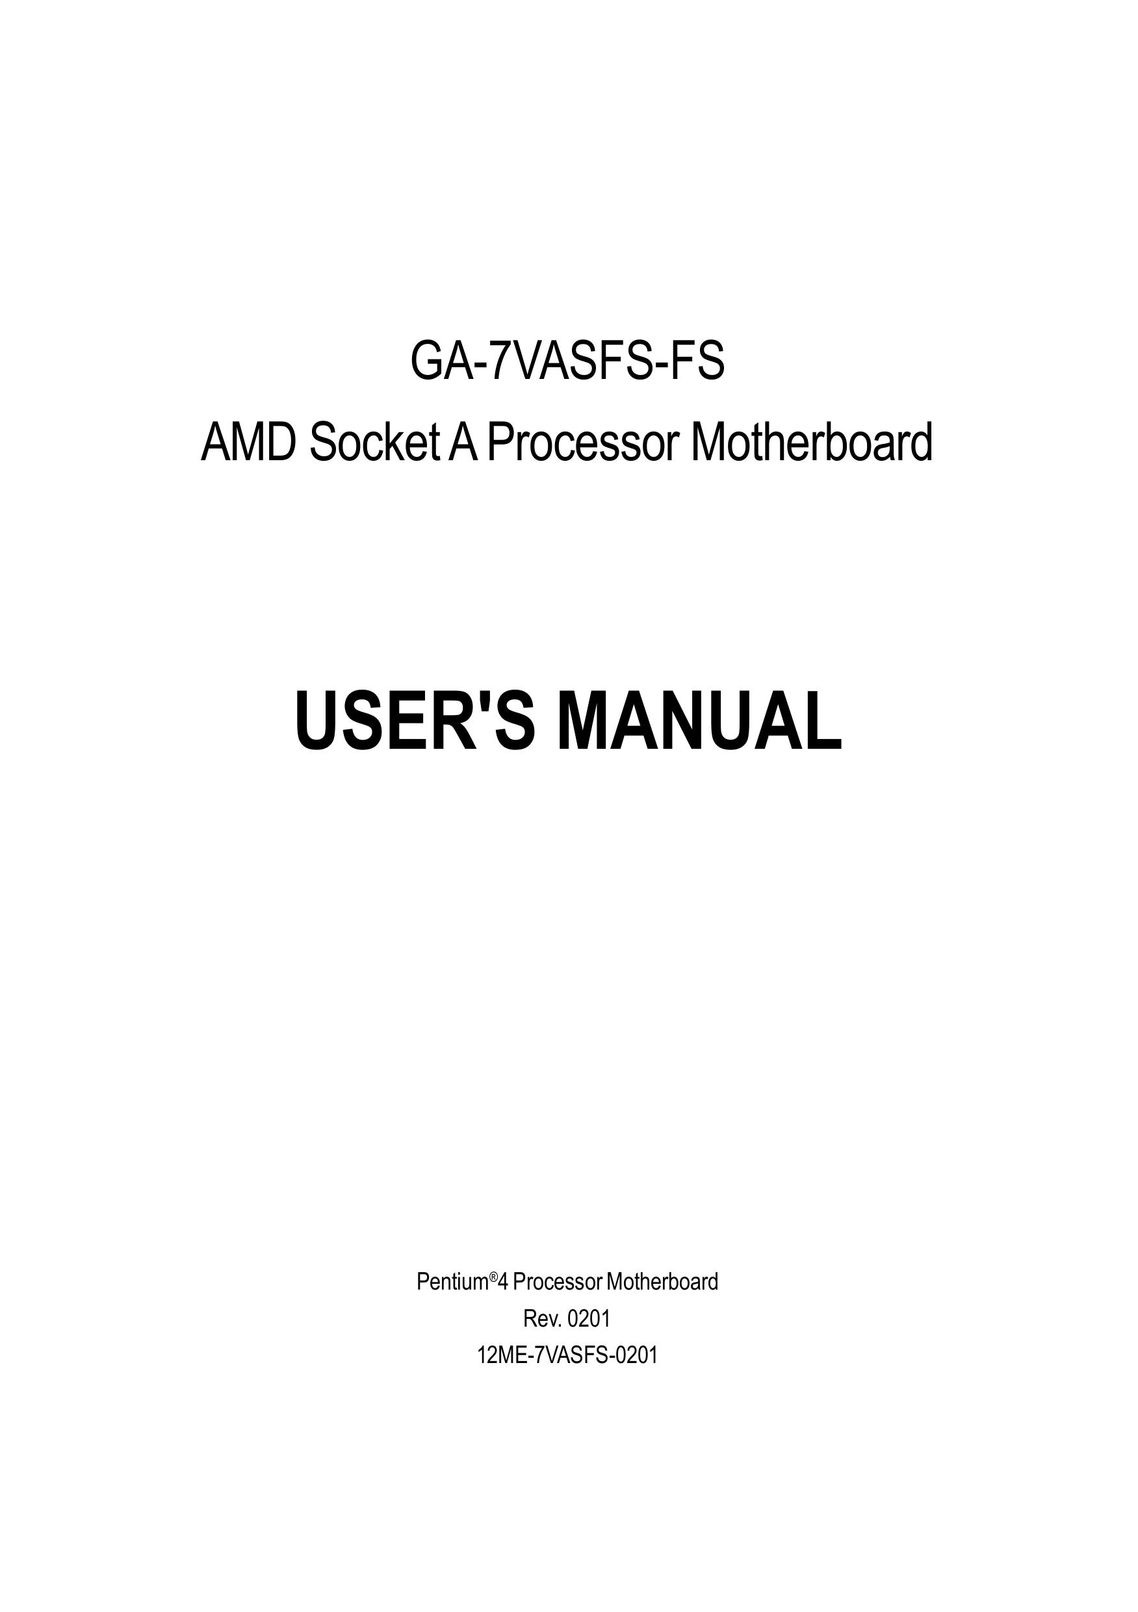 AMD GA-7VASFS-FS Impact Driver User Manual